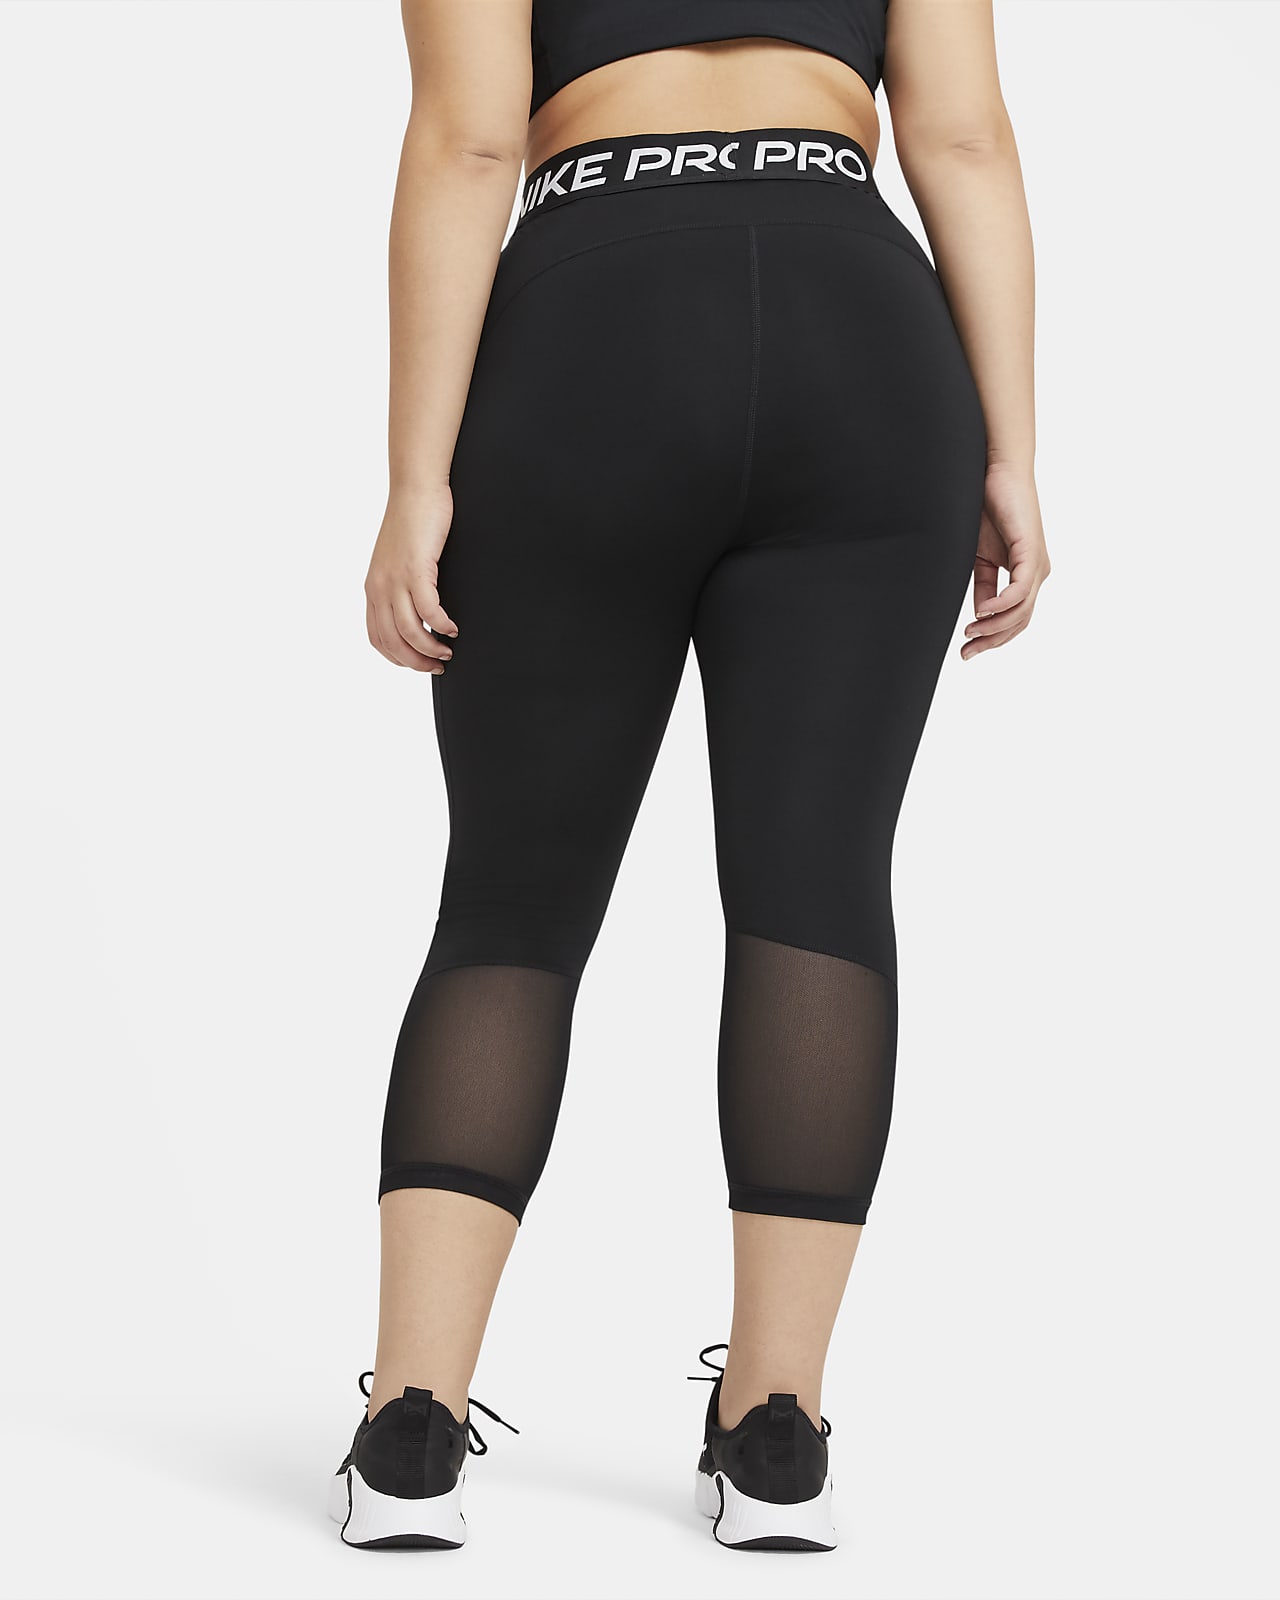 Nike Pro Women's Mid-Rise Crop Leggings (Plus Size).